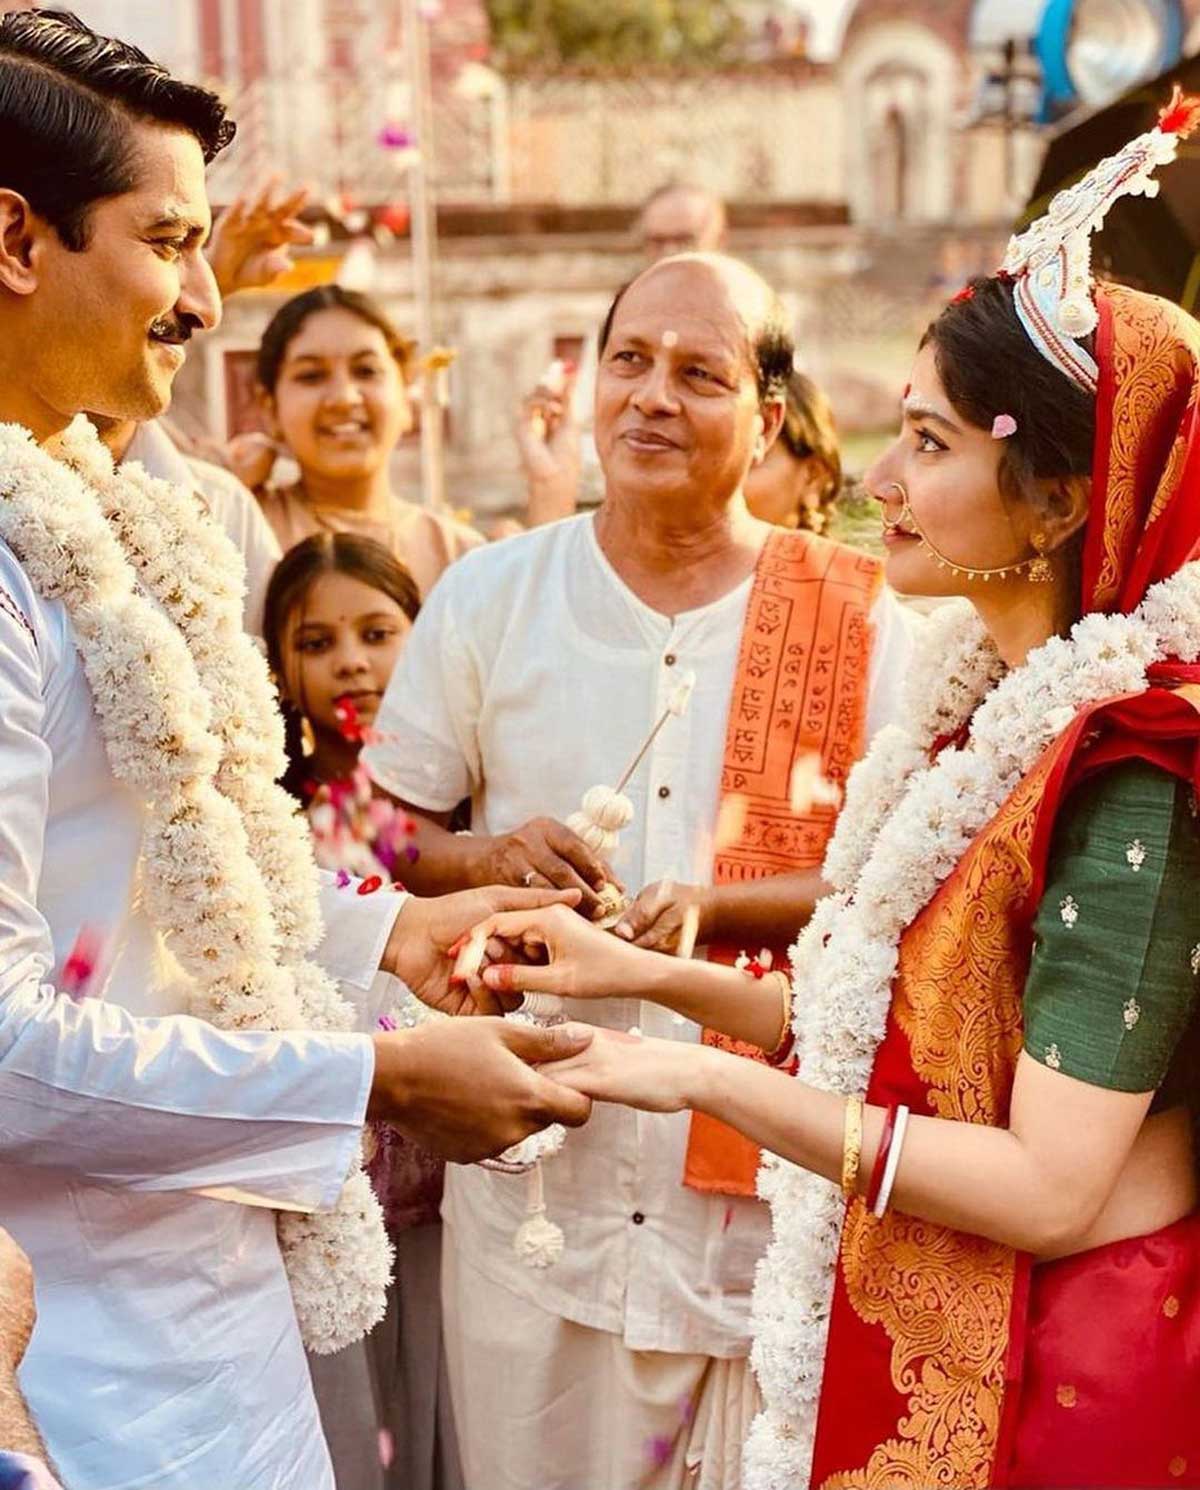 Who is Sai Pallavi marrying? - Rediff.com